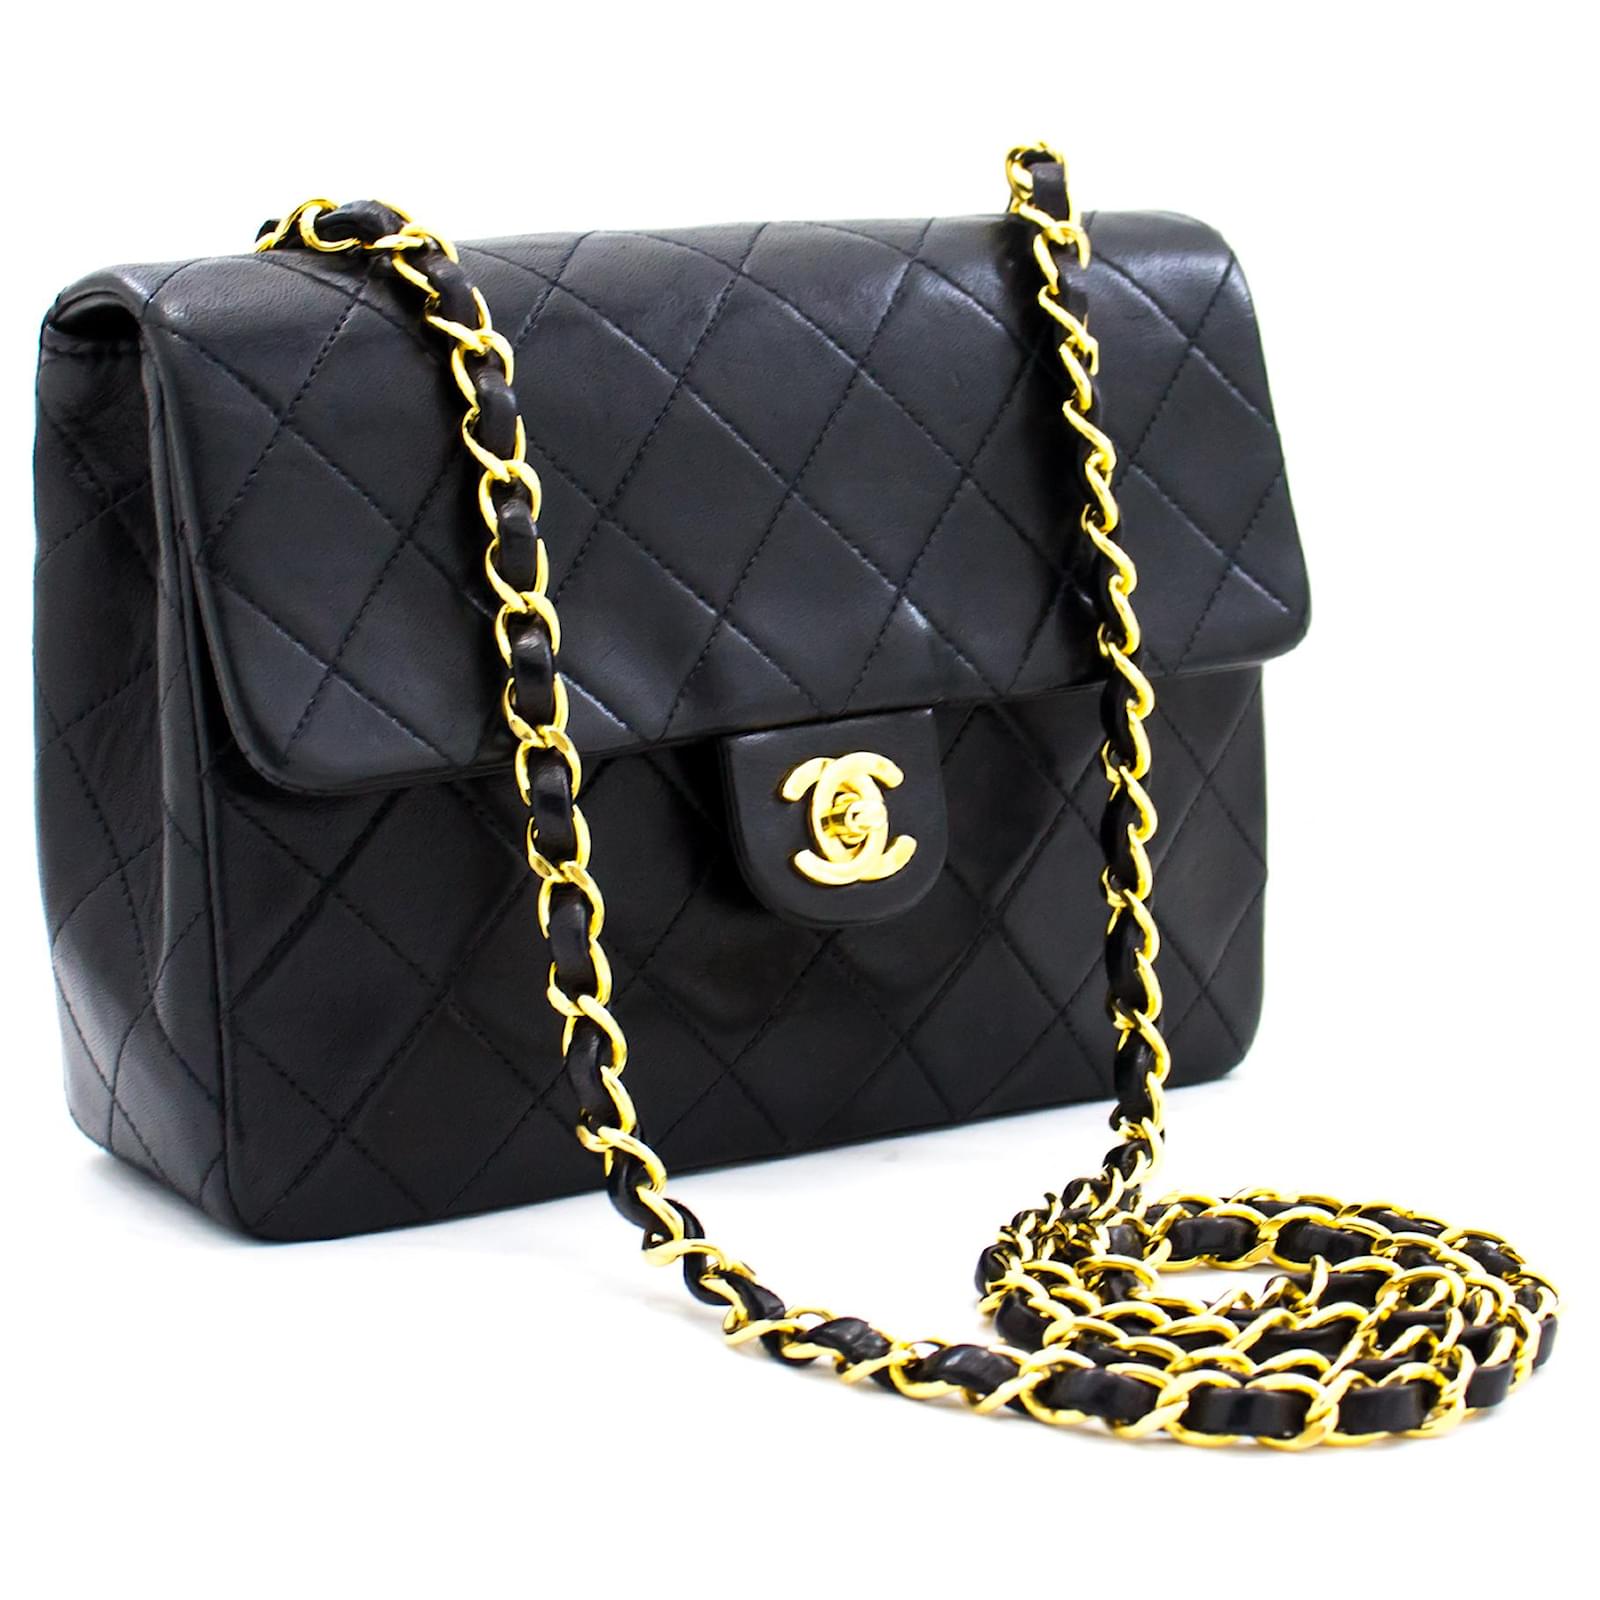 chanel small black purse leather